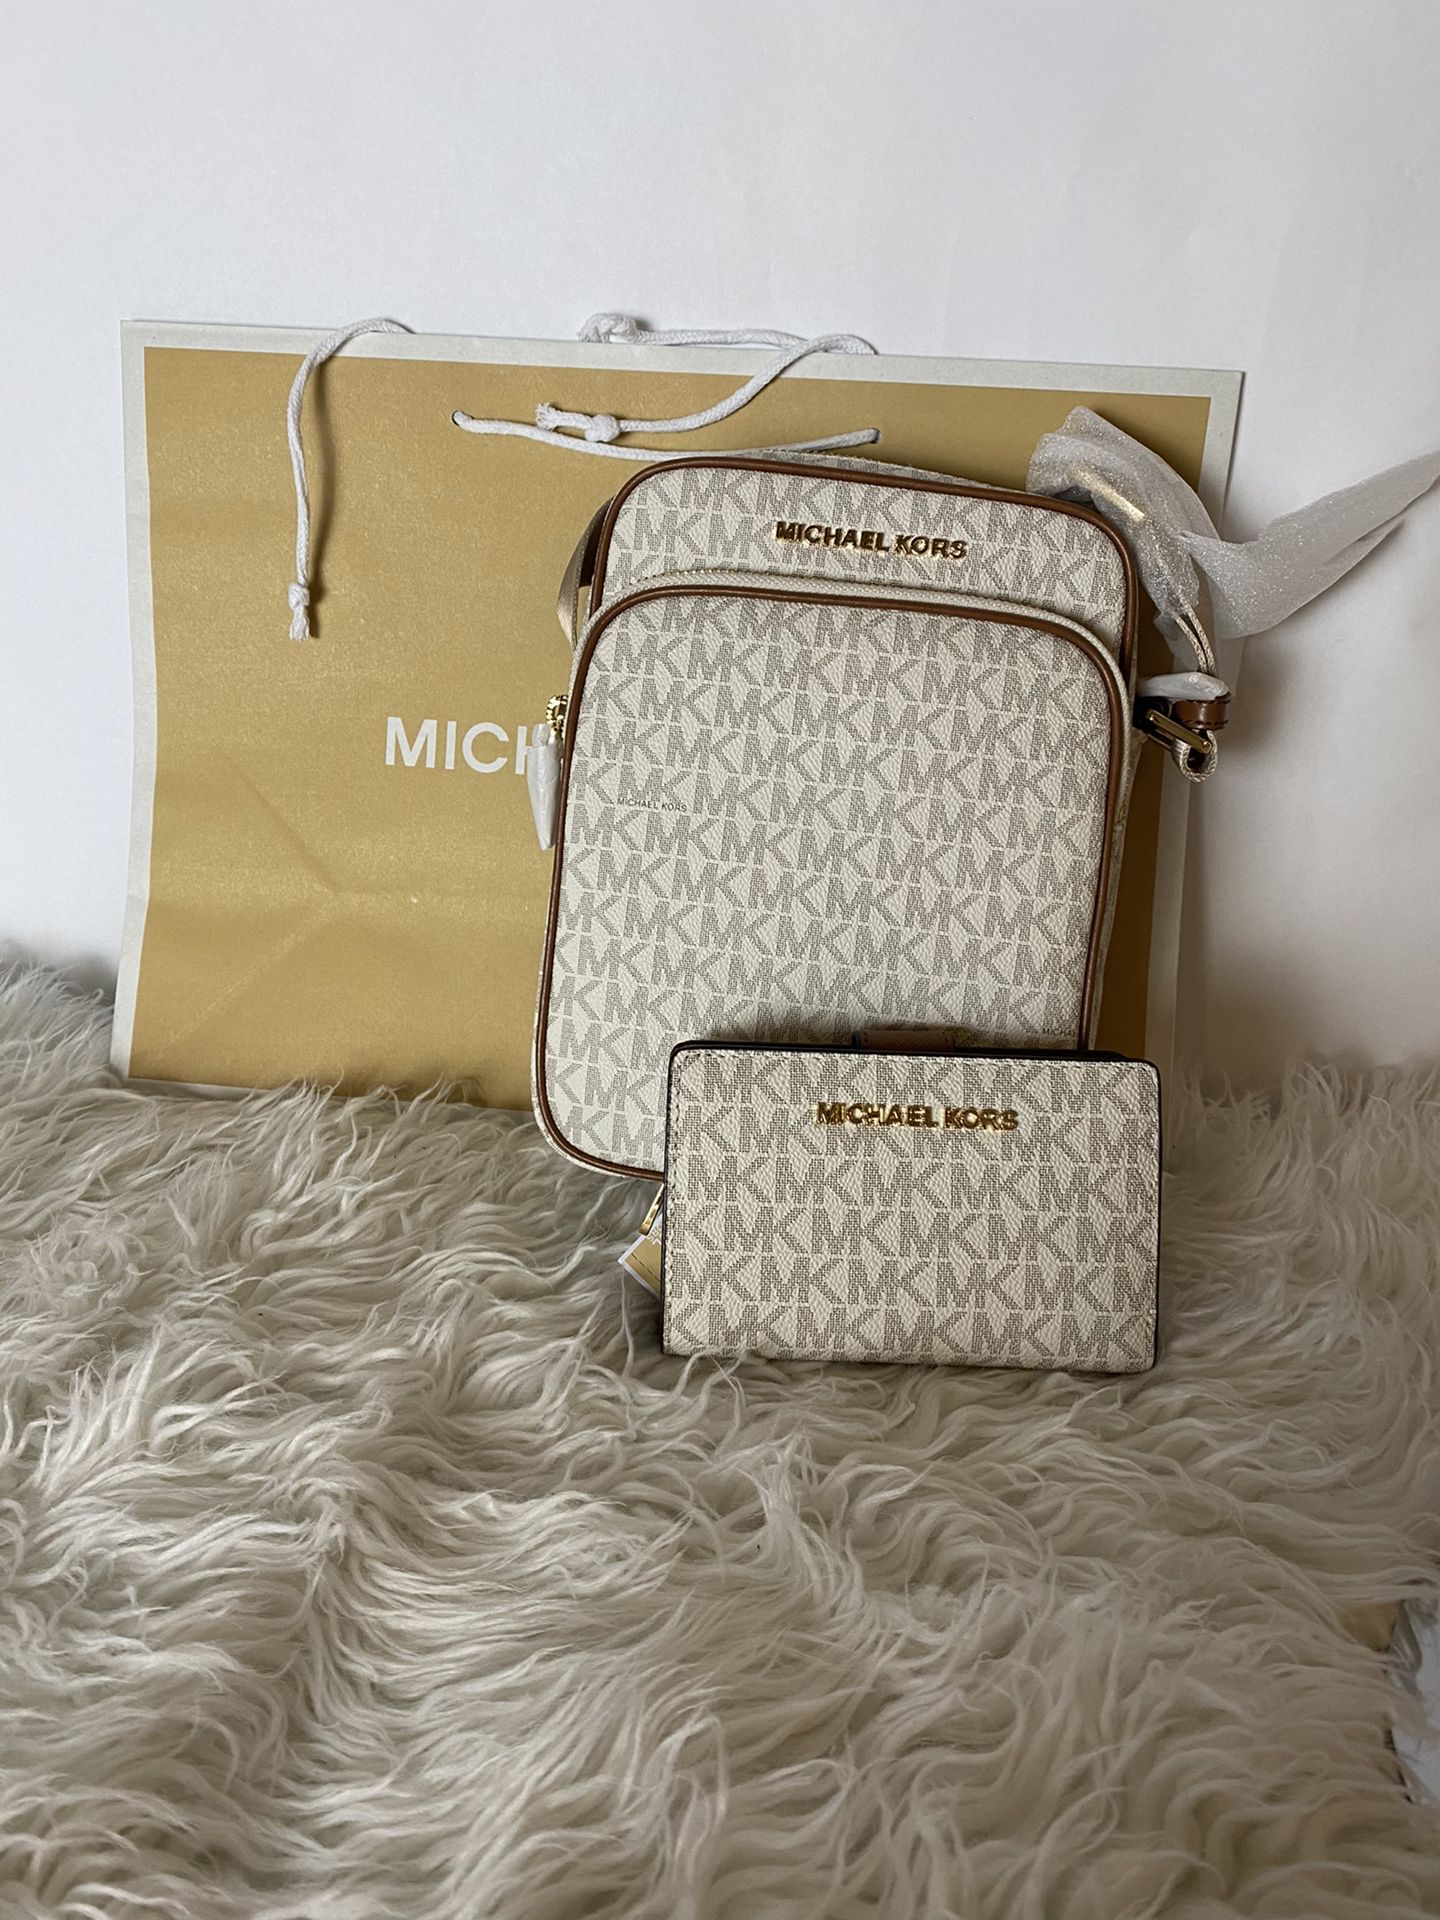 Michael Kors handbag and wallet